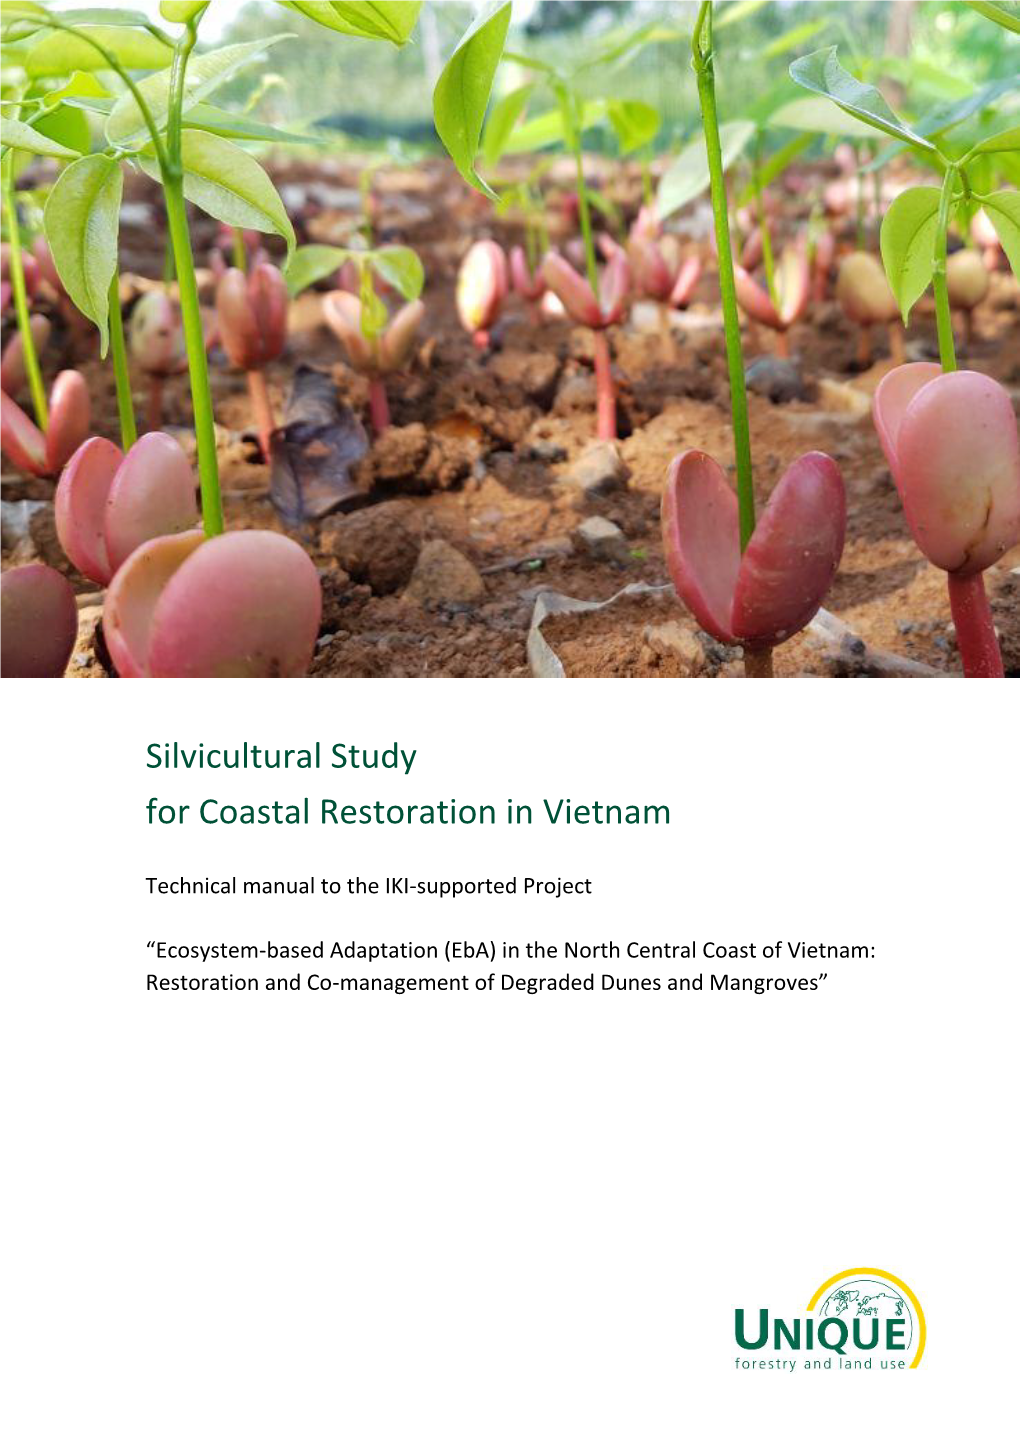 Silvicultural Study for Coastal Restoration in Vietnam